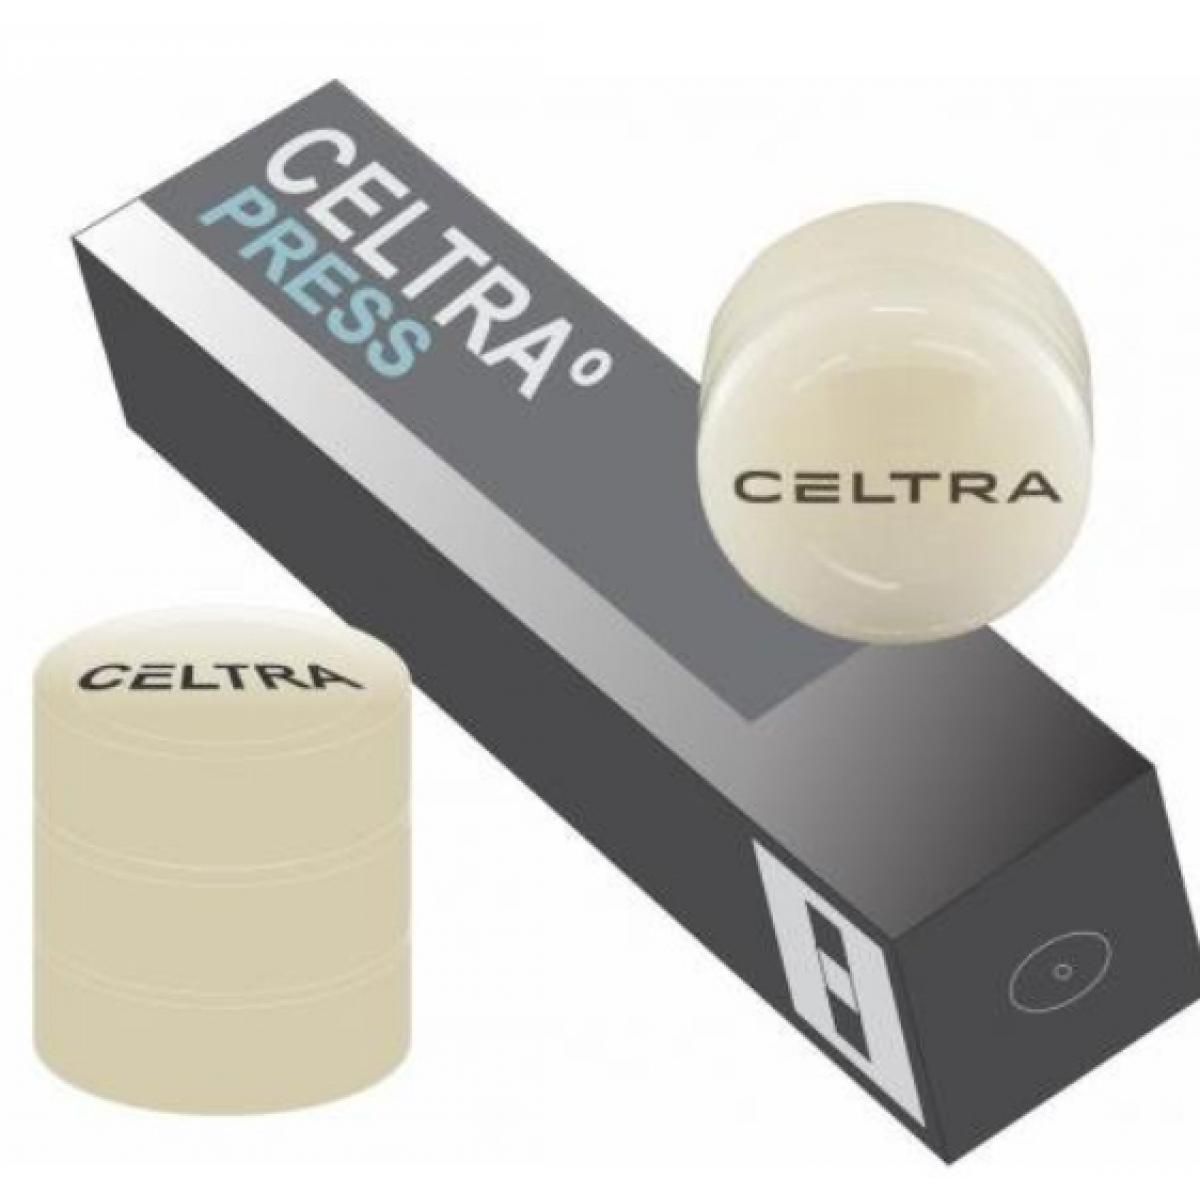 CELTRA PRESS MT A3 5 X 3 GR DENTSPLY -